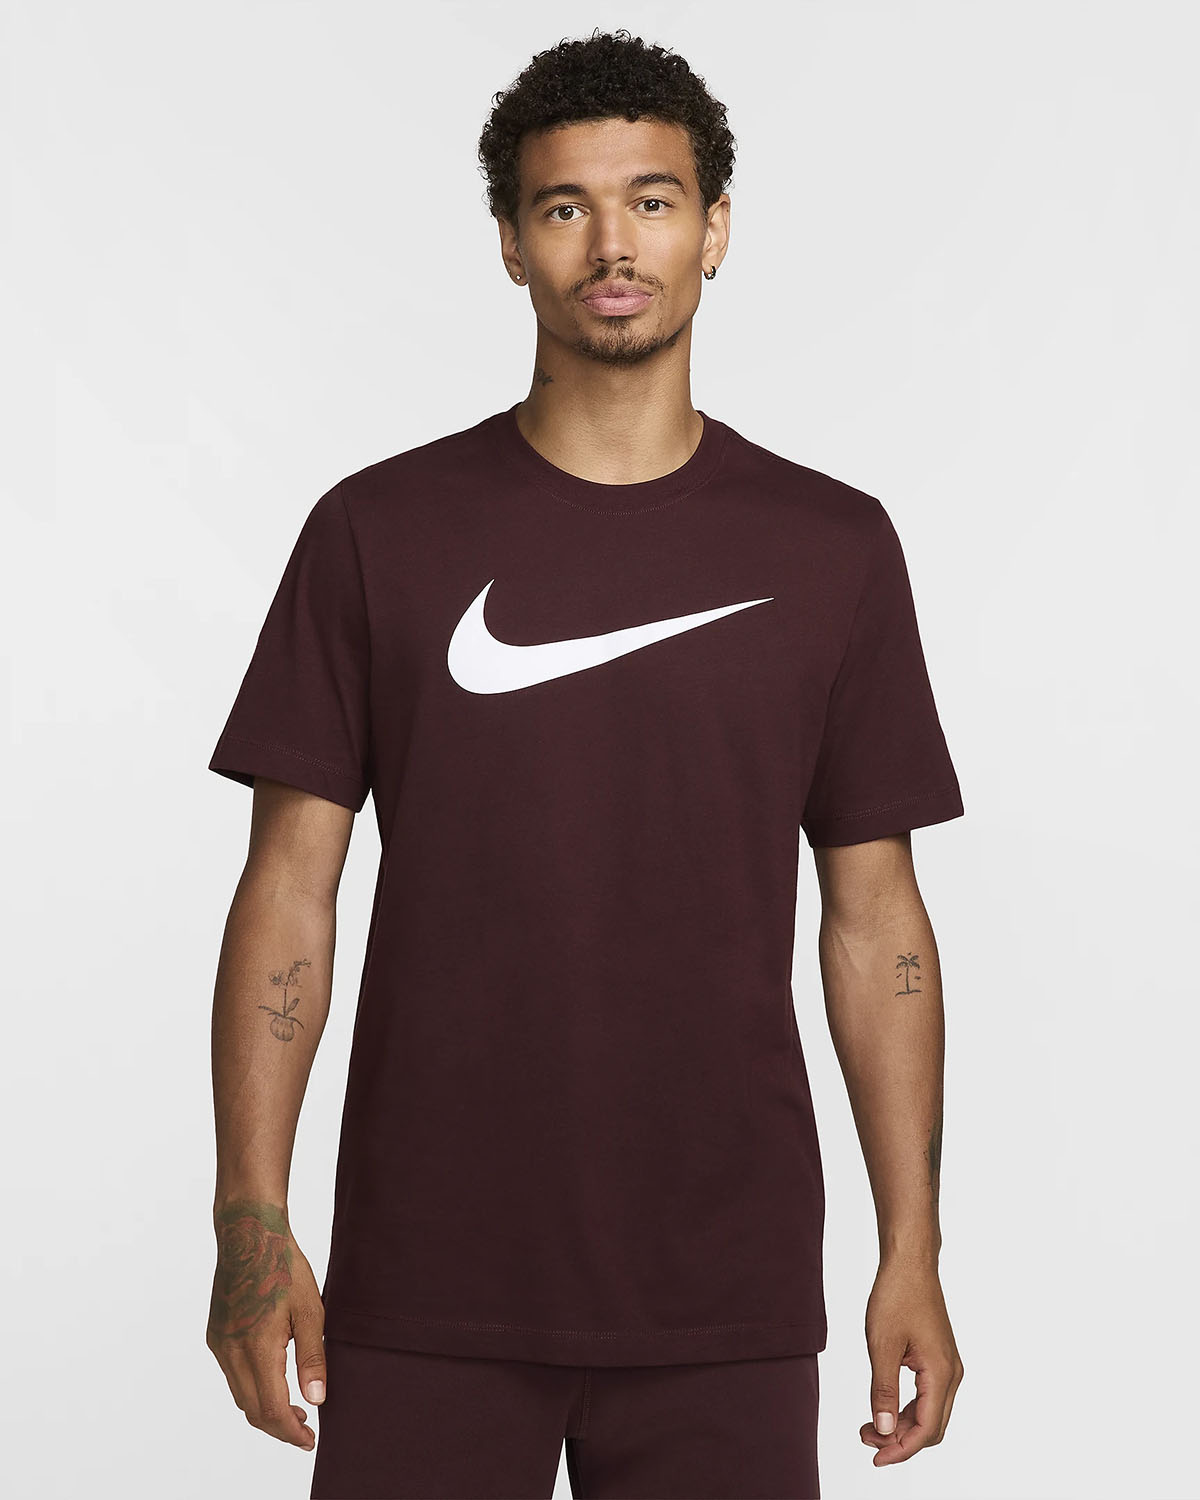 Nike Sportswear Swoosh T Shirt Burgundy Crush